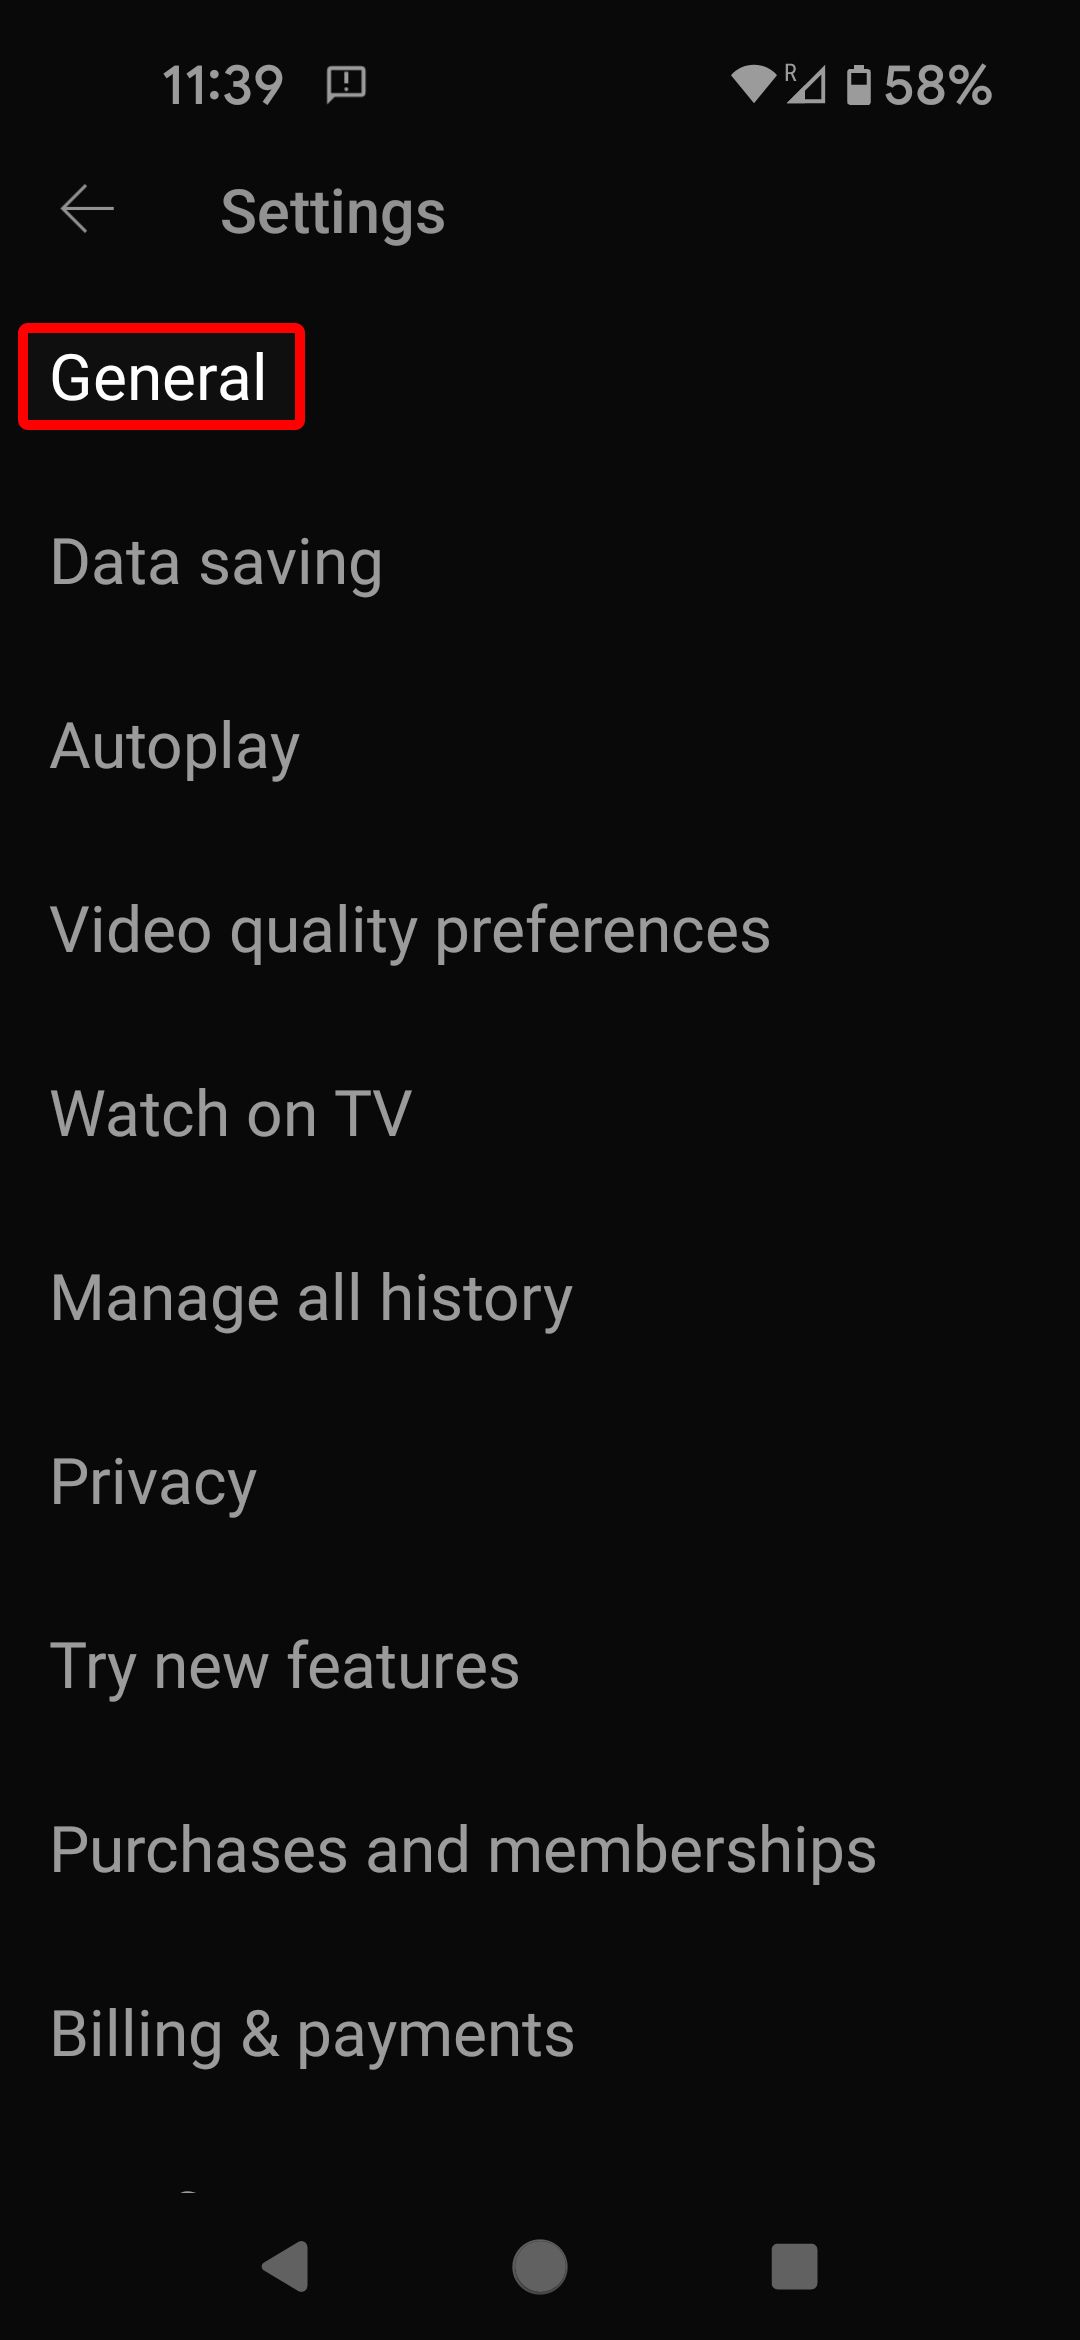 YouTube mobile Settings menu highlighting the General option